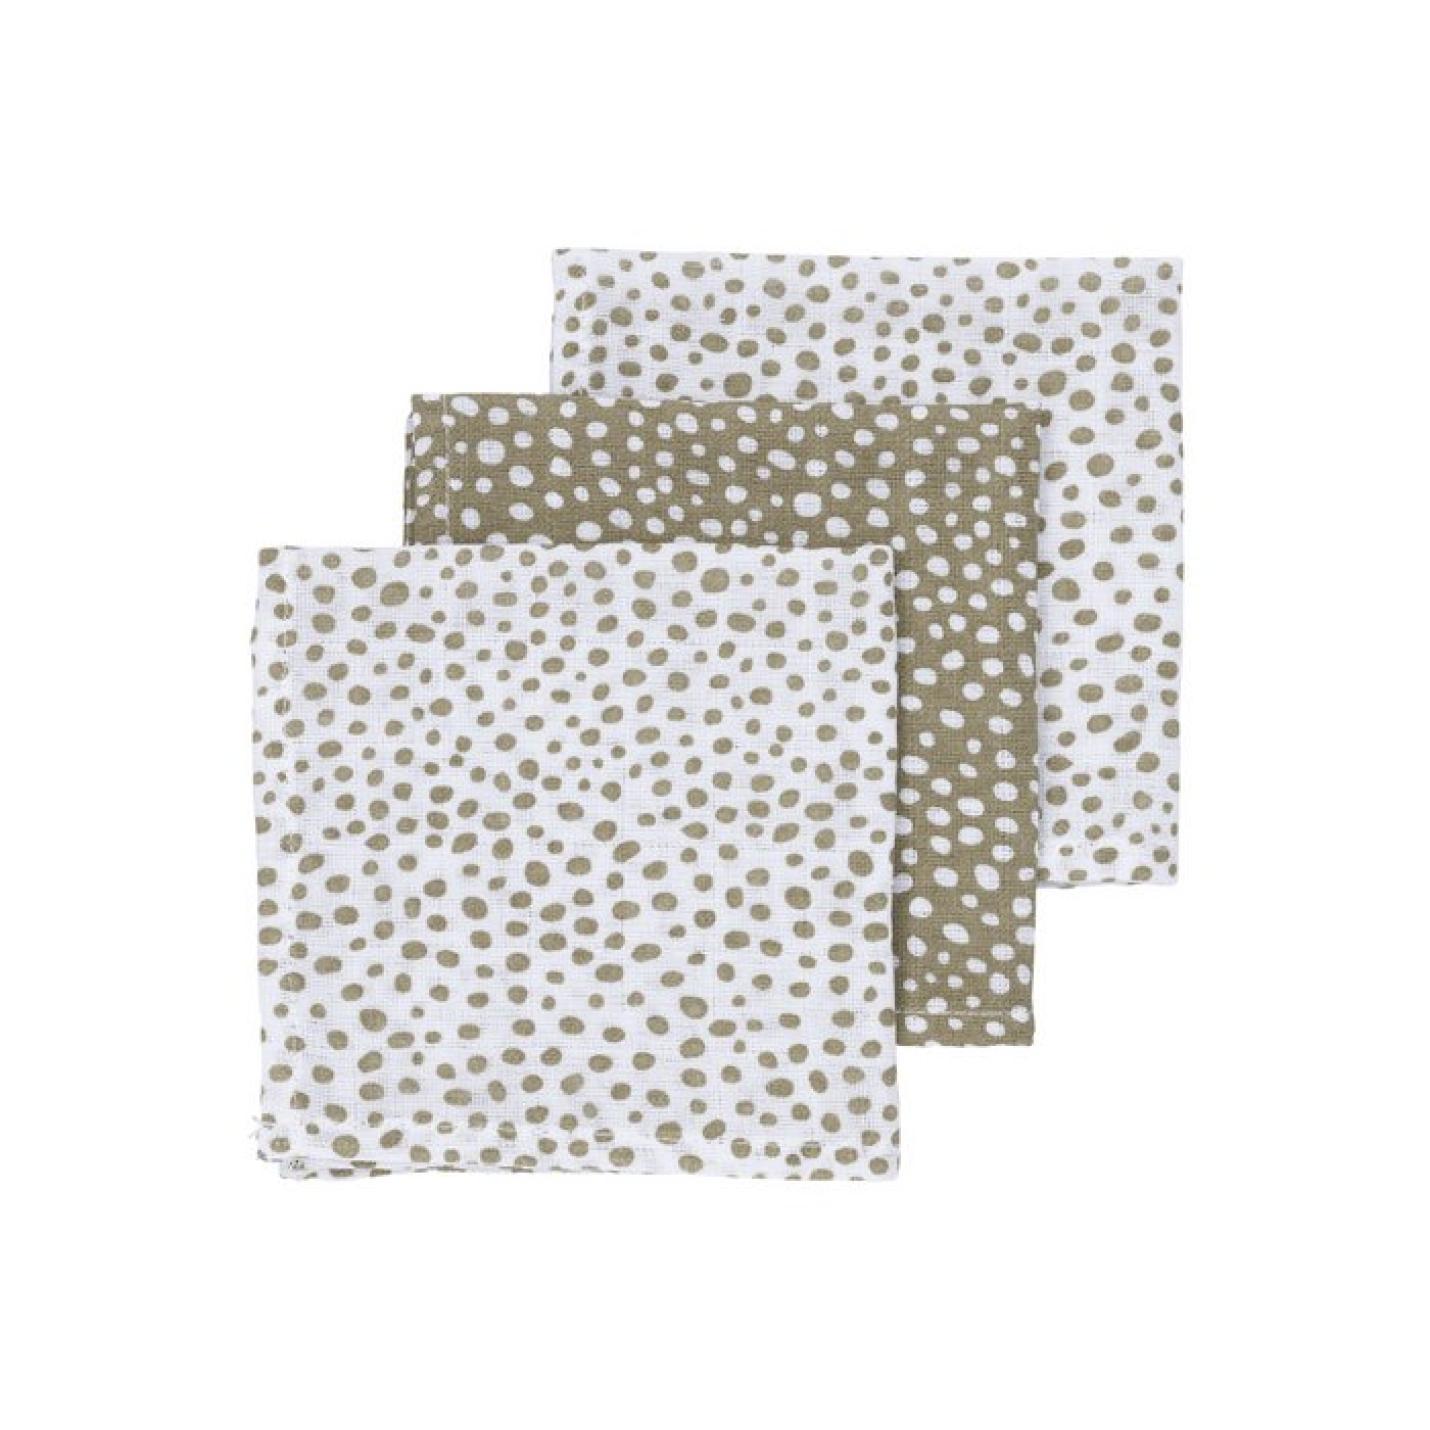 Monddoekje Cheetah Taupe is vierkant kleur taupe verschillende grootte witte stippen en wit met verschillende grootte taupe stippen